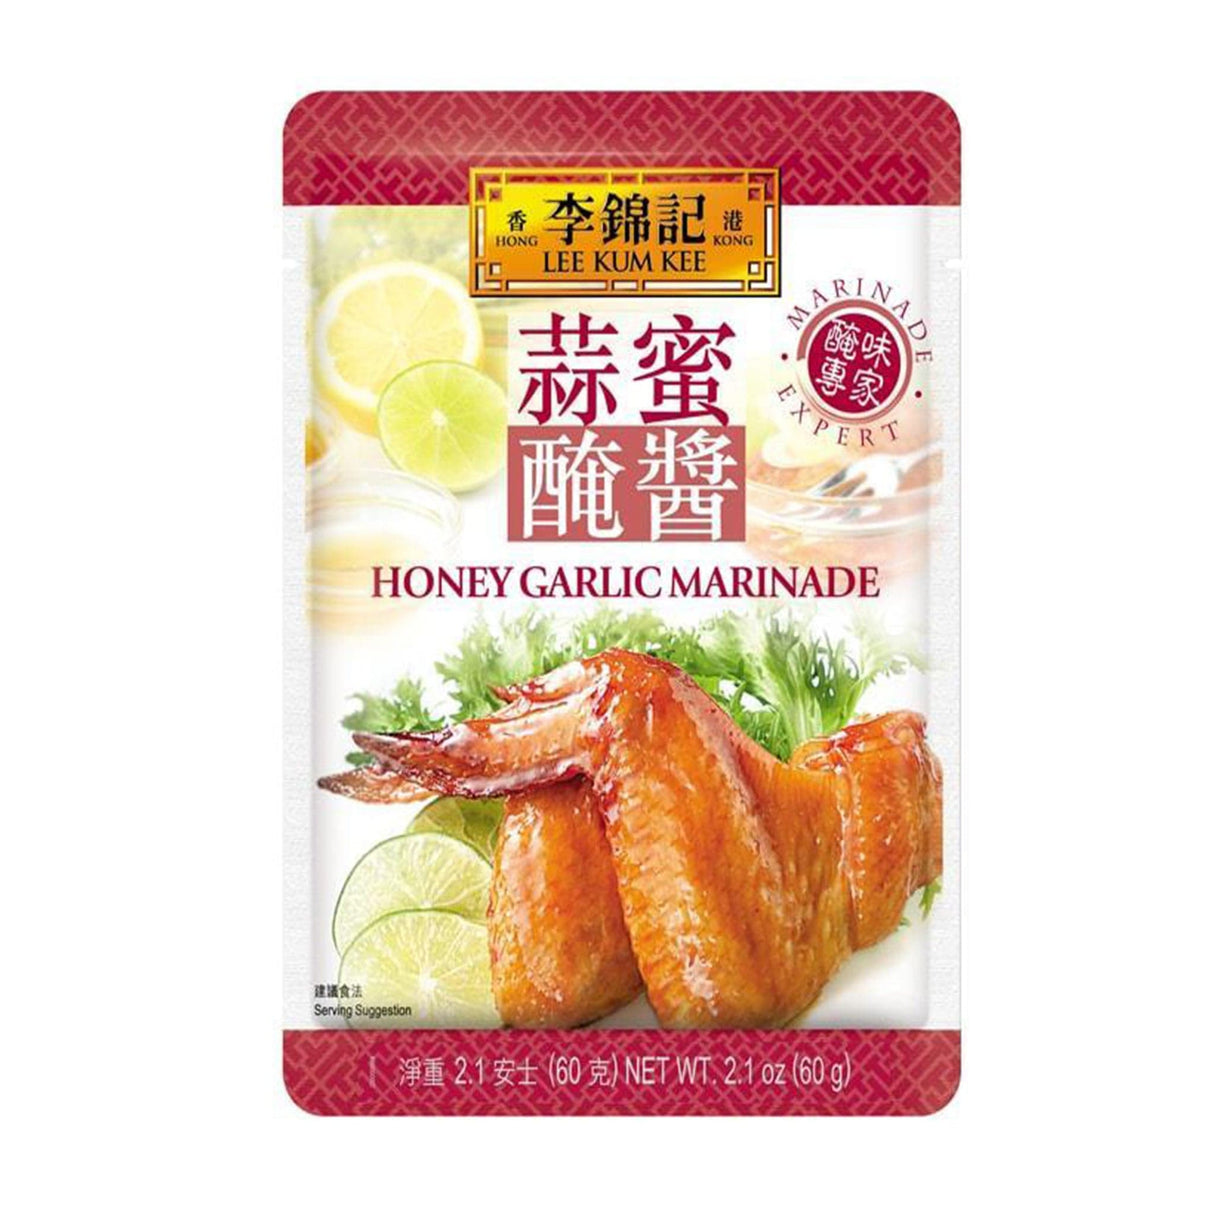 Lee Kum Kee Honey Garlic Marinade